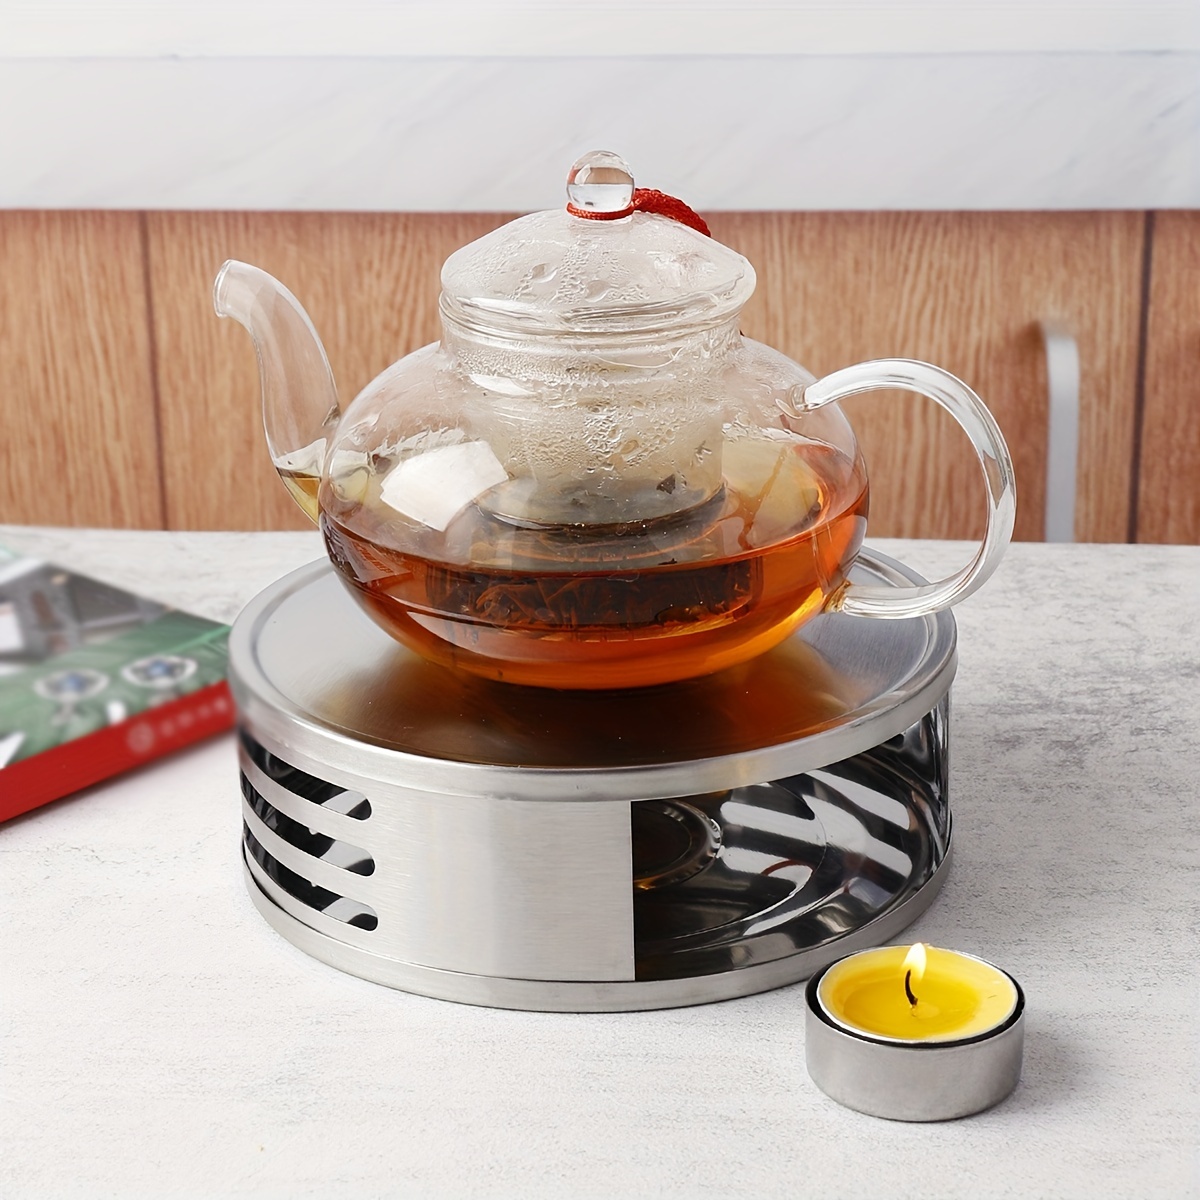 Ceramic Teapot Warmer Holder Tea Warmer Insulation Base for Kitchen Camping